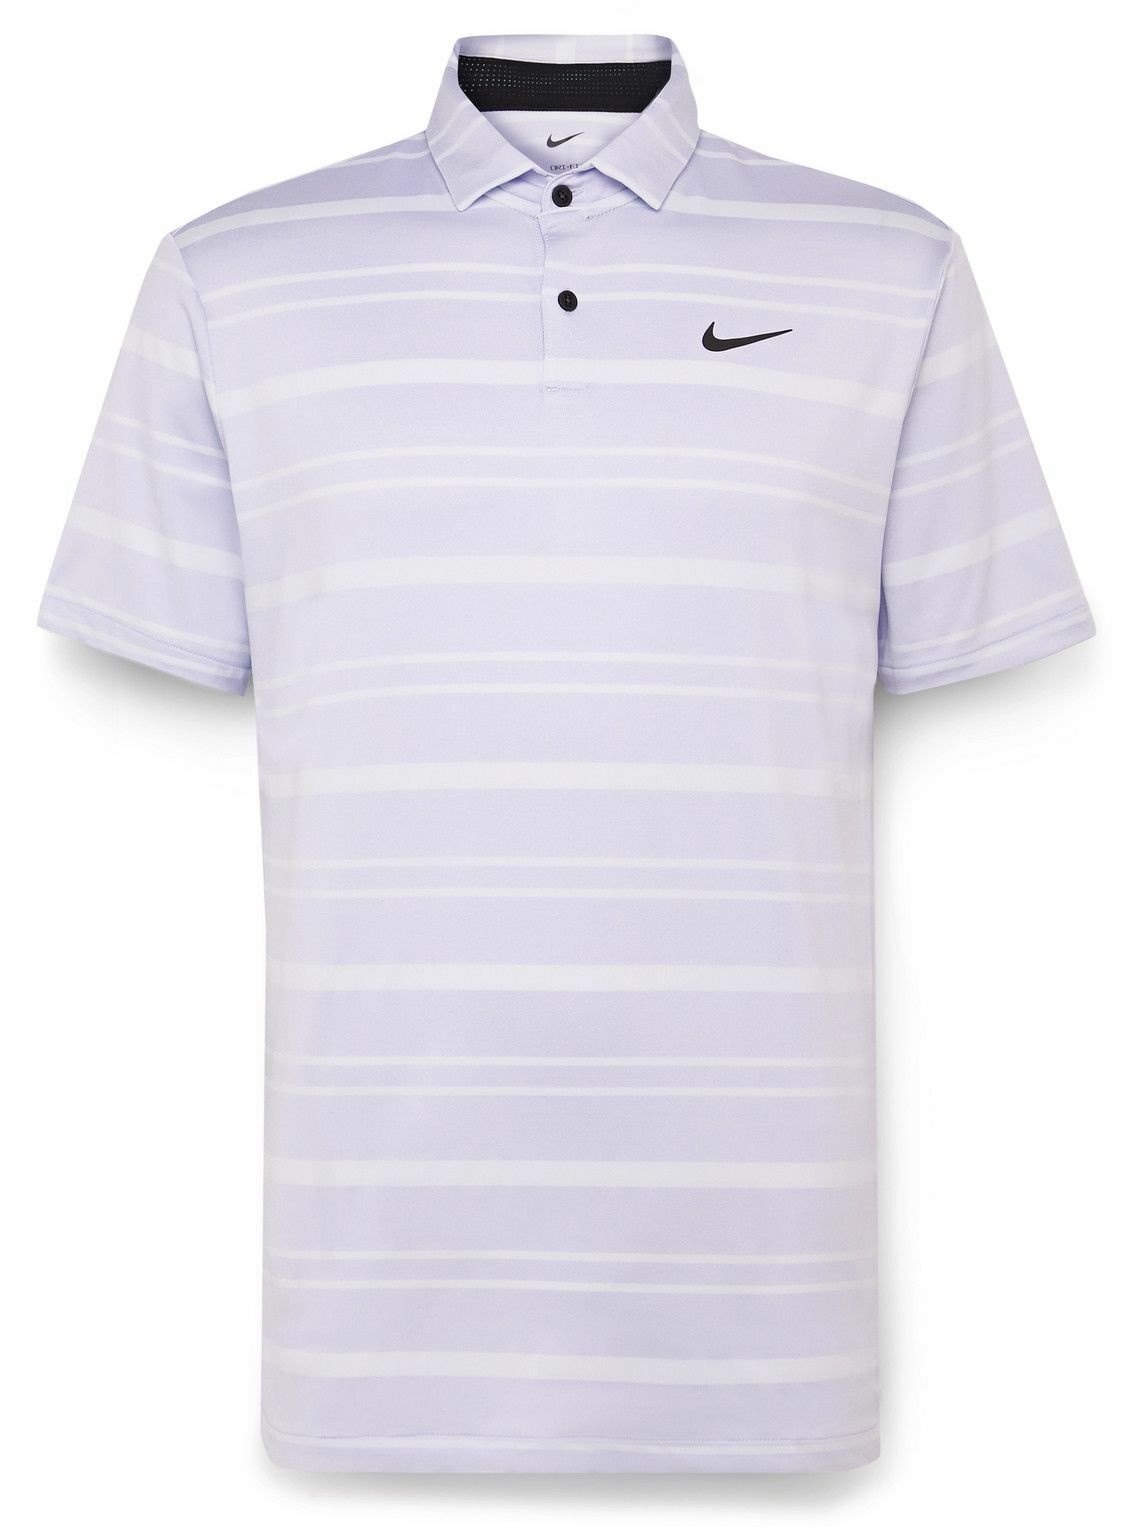 Nike Golf - Tour Striped Dri-FIT Golf Polo Shirt - Purple Nike Golf